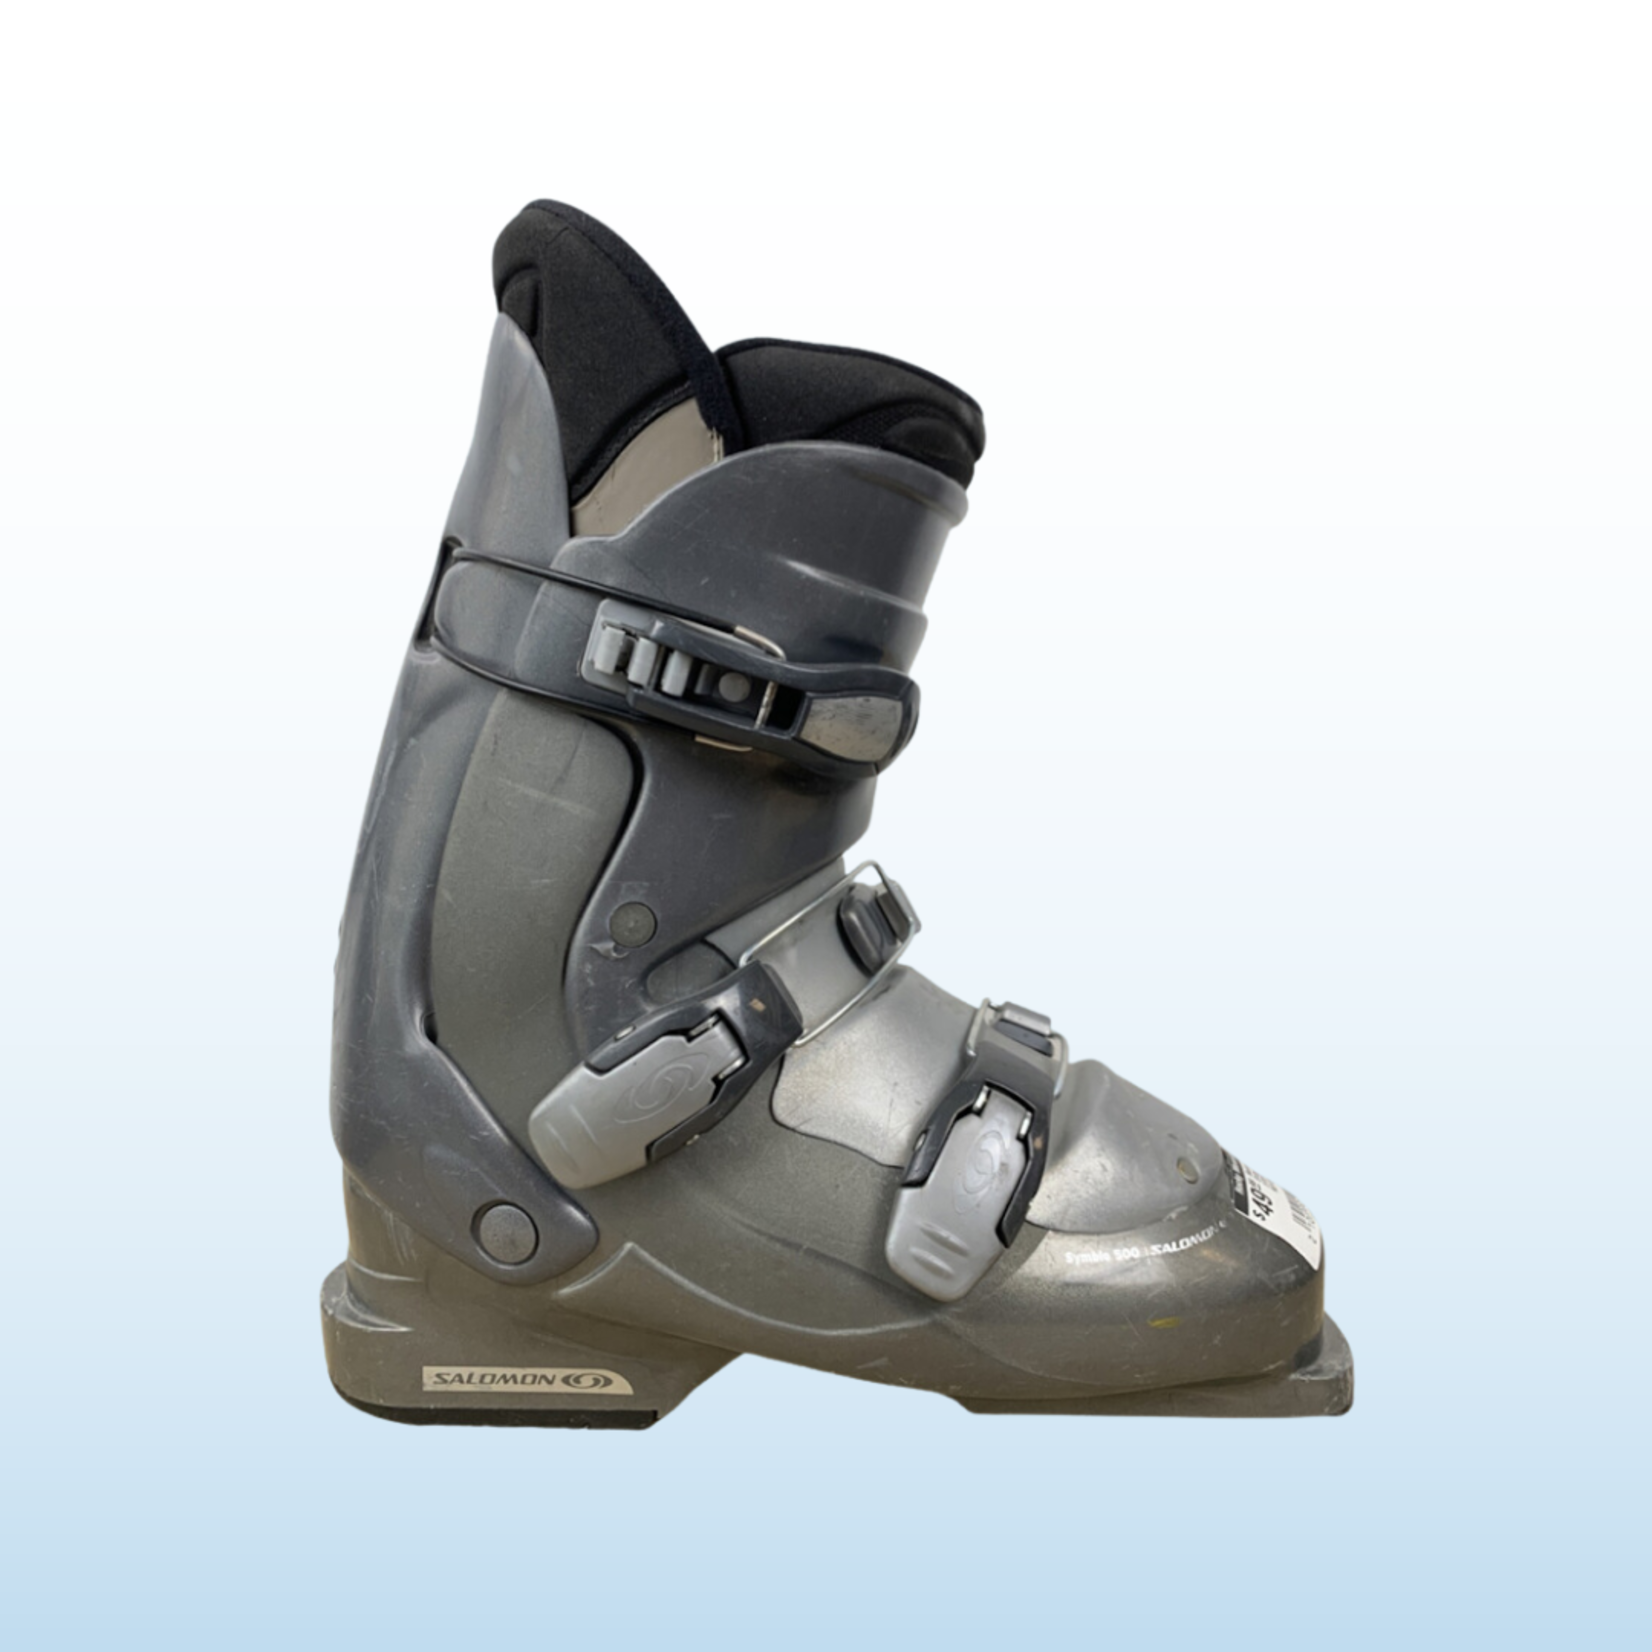 Salomon Salomon Symbio Rear Entry Ski Boots, Size 24/24.5  SOLD AS IS/NO REFUNDS/EXCHANGES